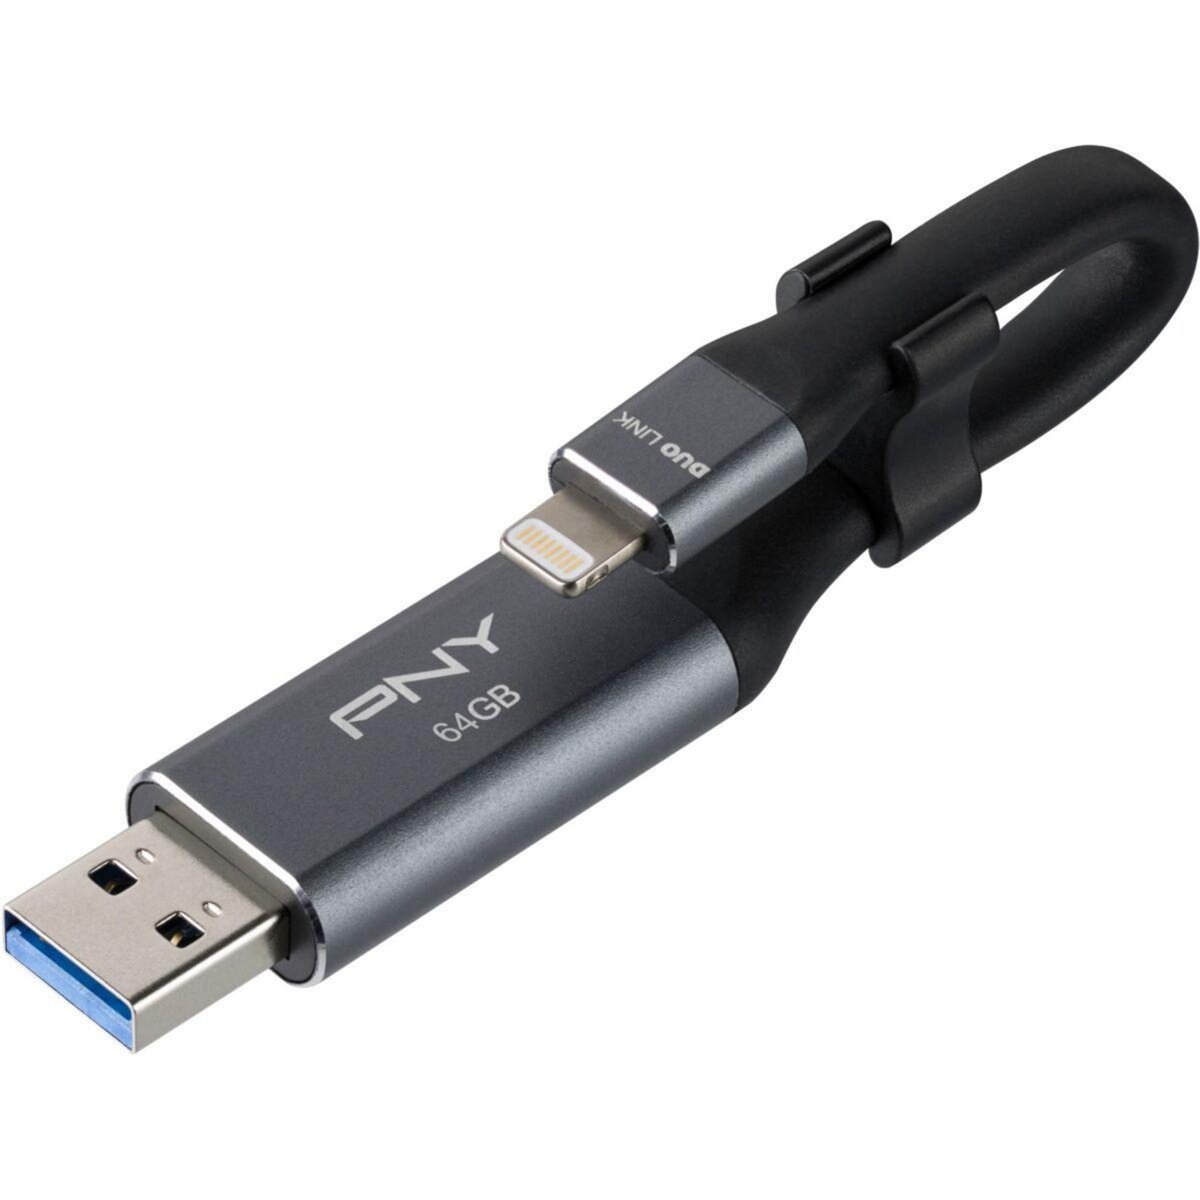 Clé USB iPhone SANDISK 64go iXpand Flash Drive lightning + USB